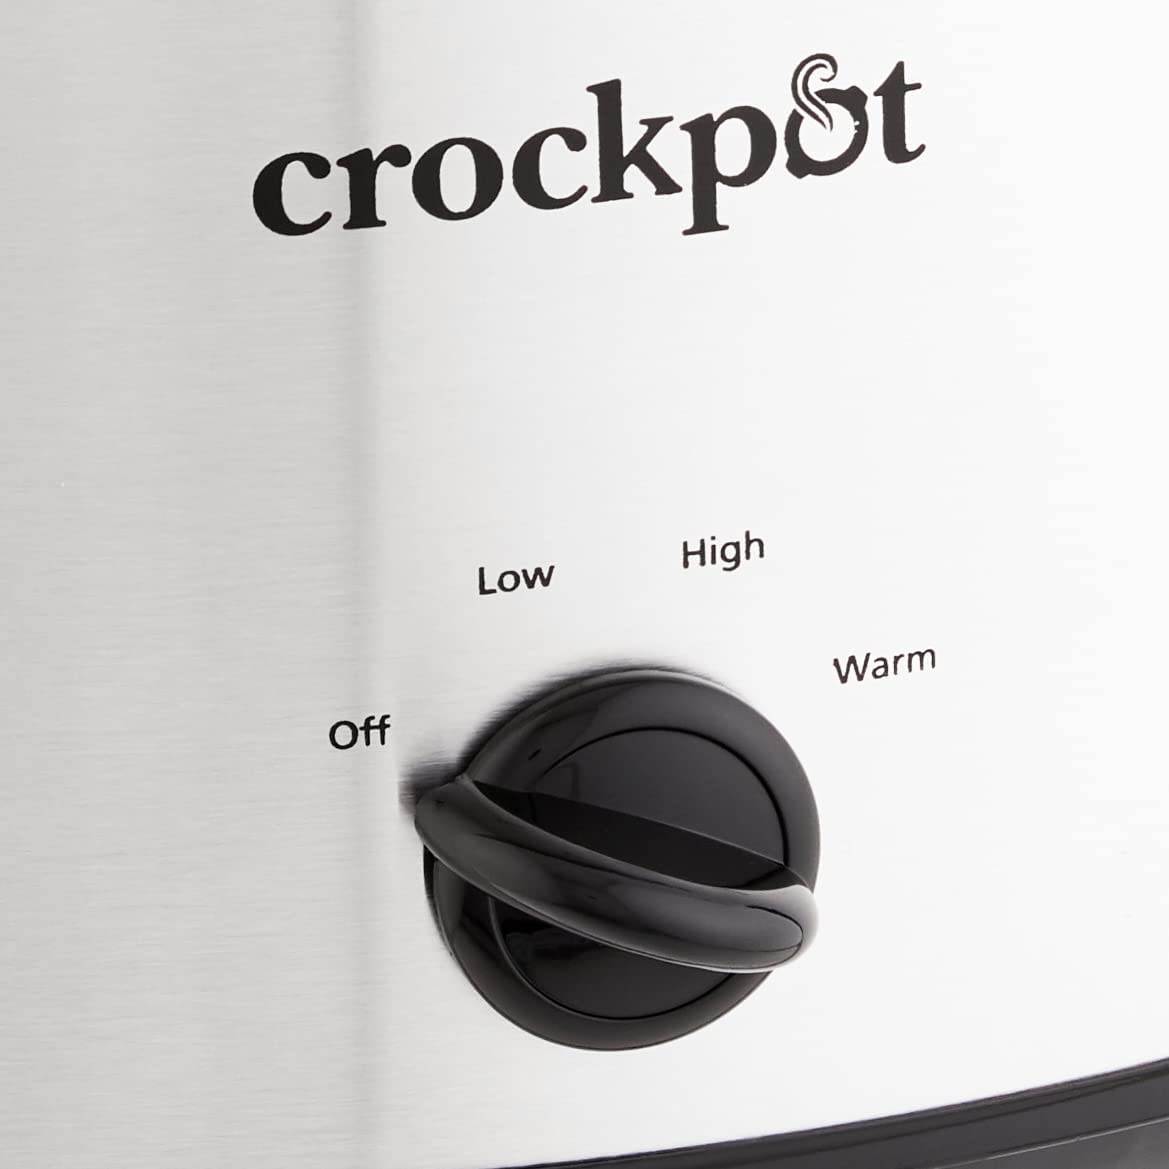 Crock Pot 16 Ounce Little Dipper Chrome Slow Cooker Review 